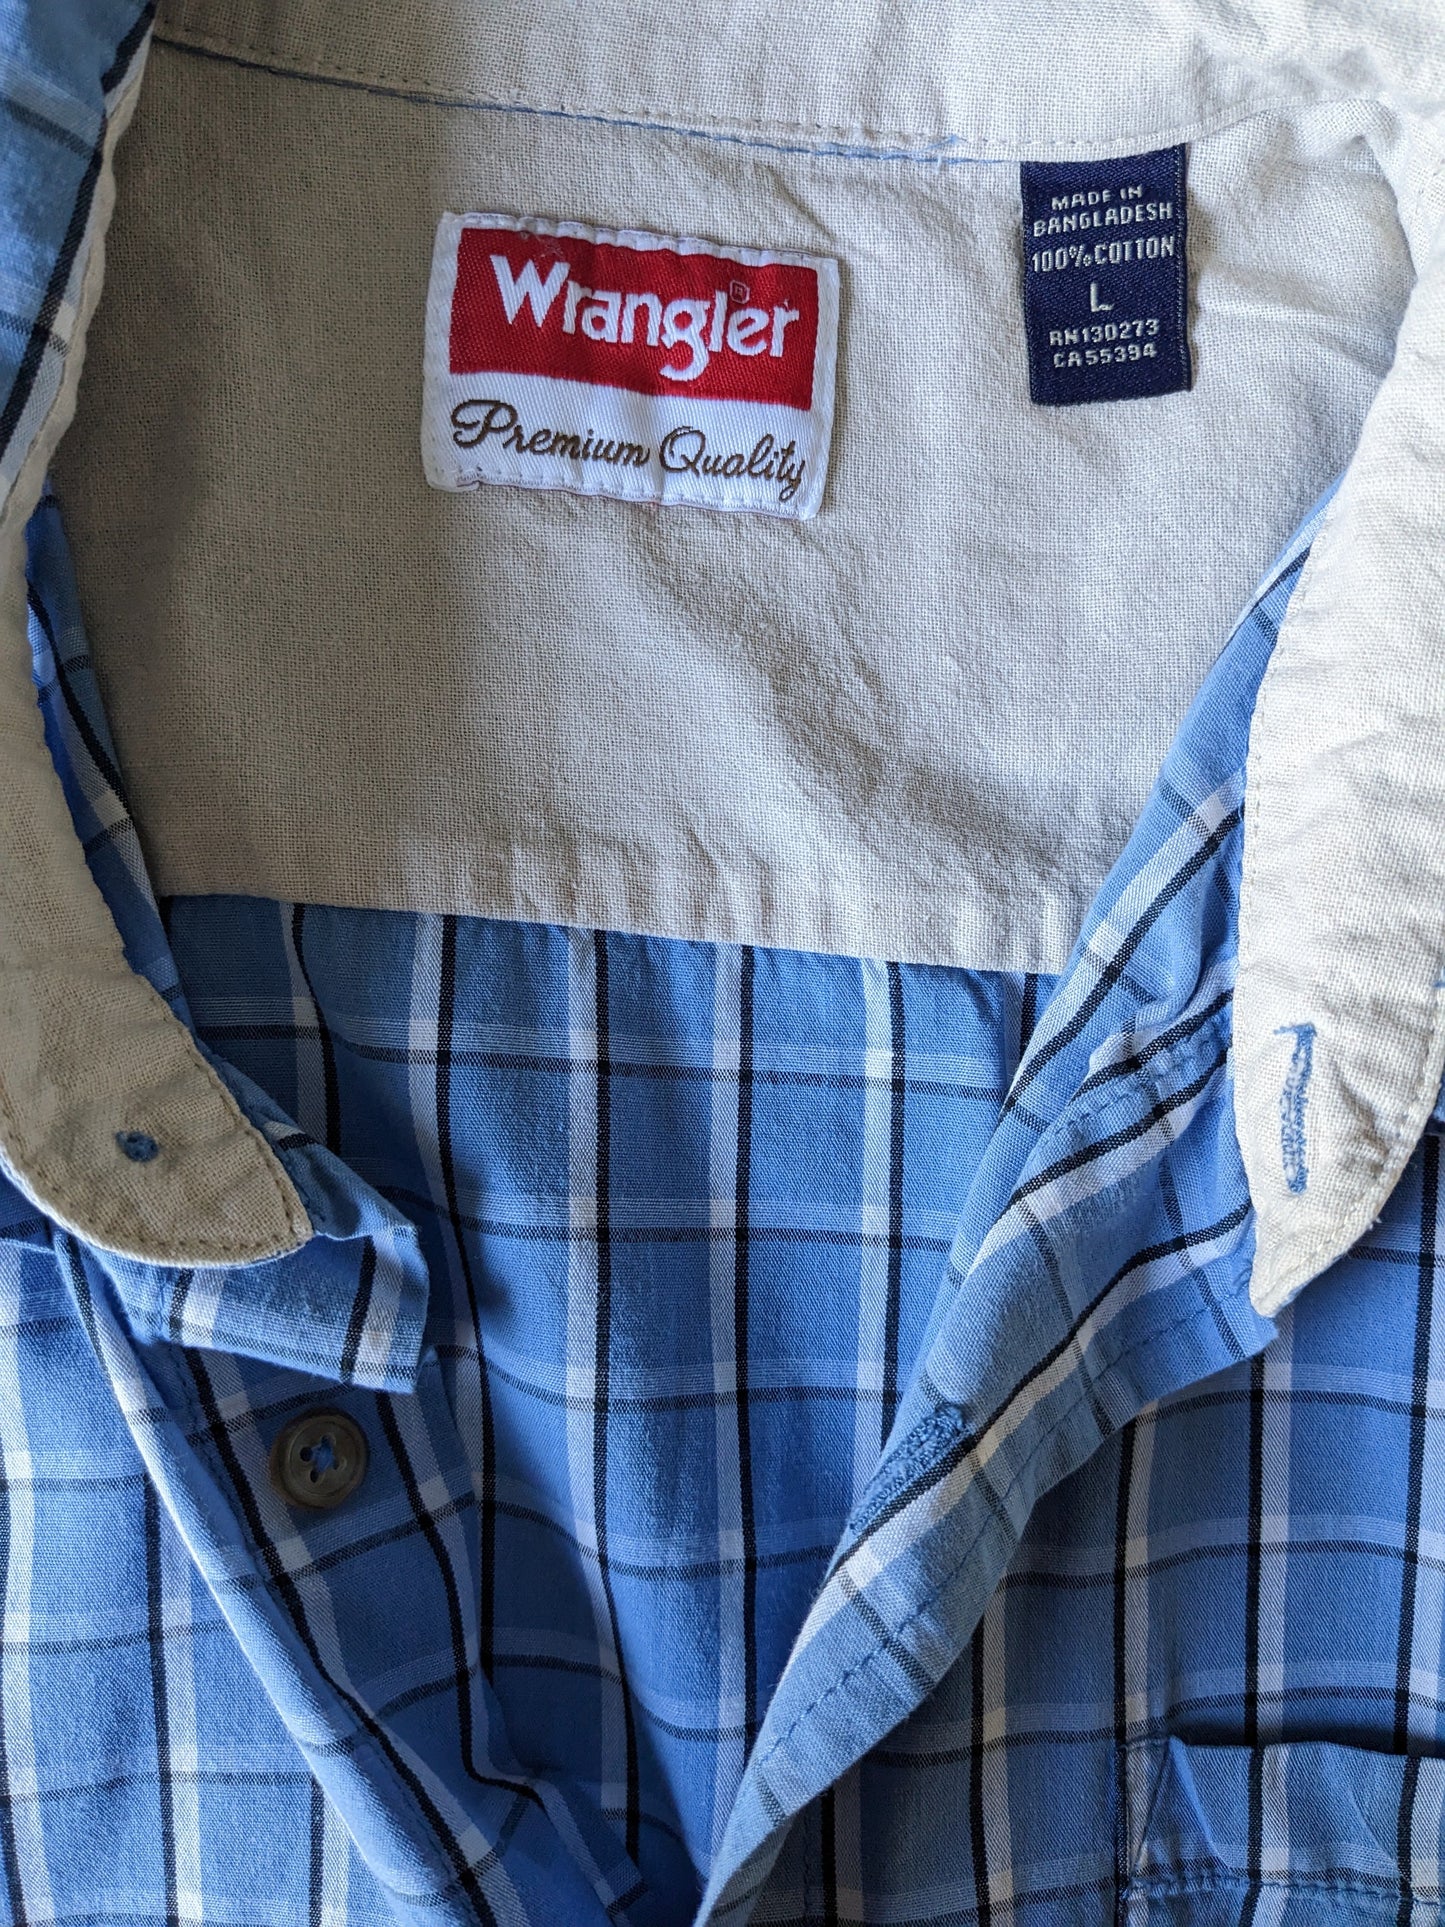 Wrangler -Hemd Kurzarm. Blau weiß schwarz geprüft. Größe L / XL.